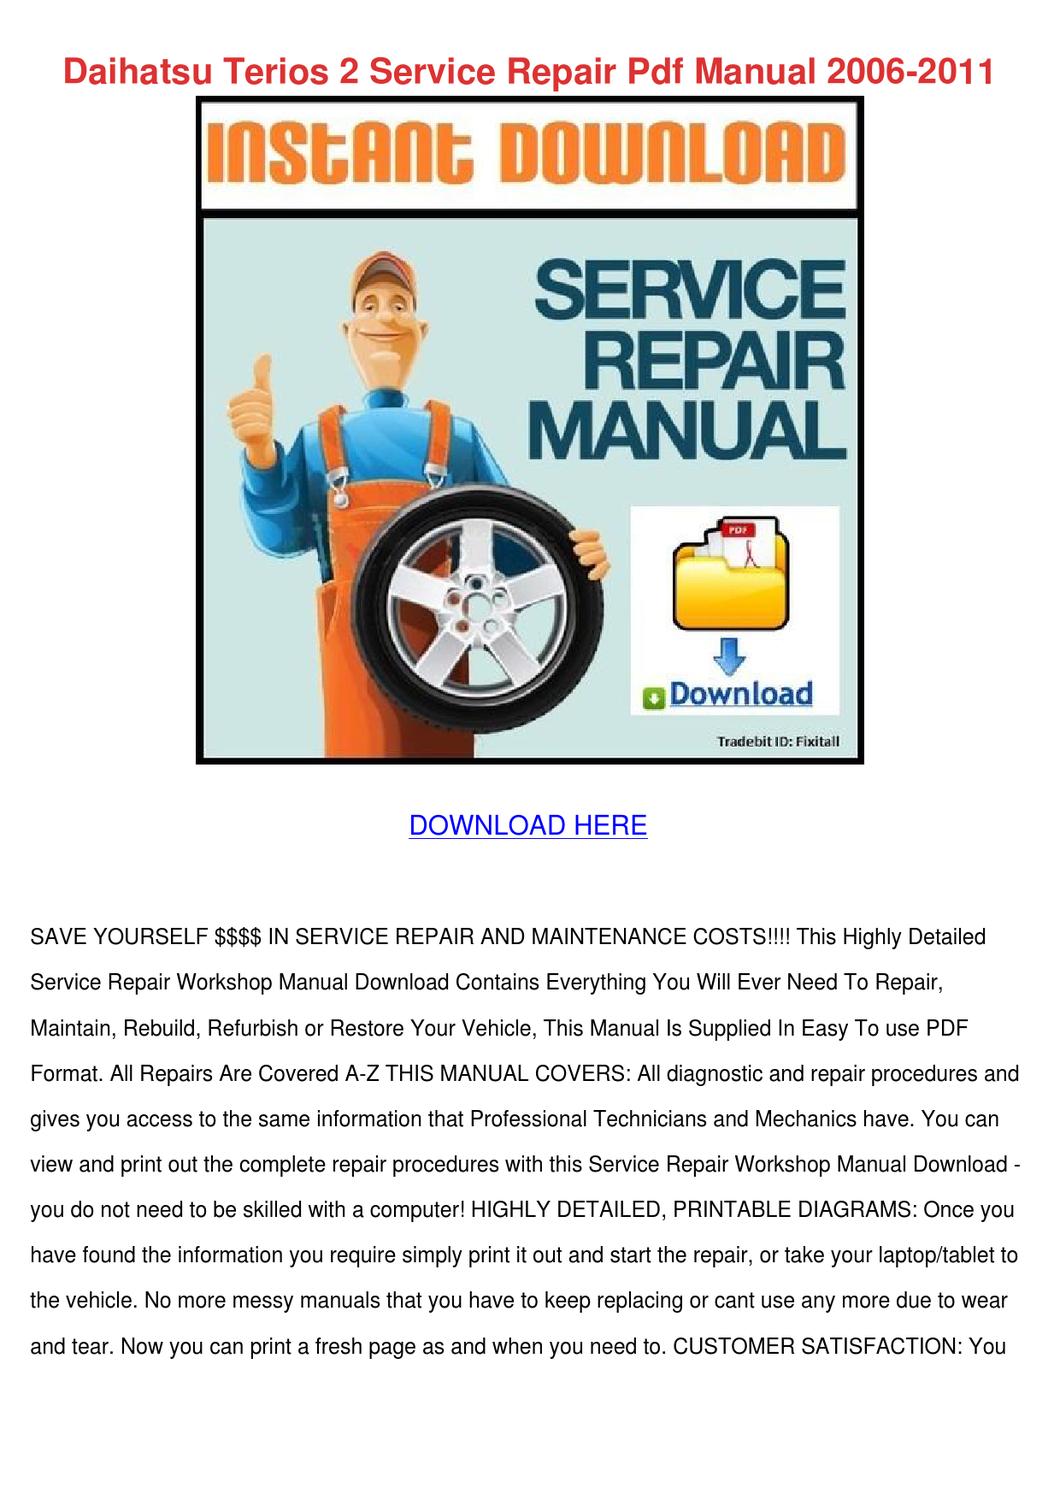 daihatsu terios service manual pdf